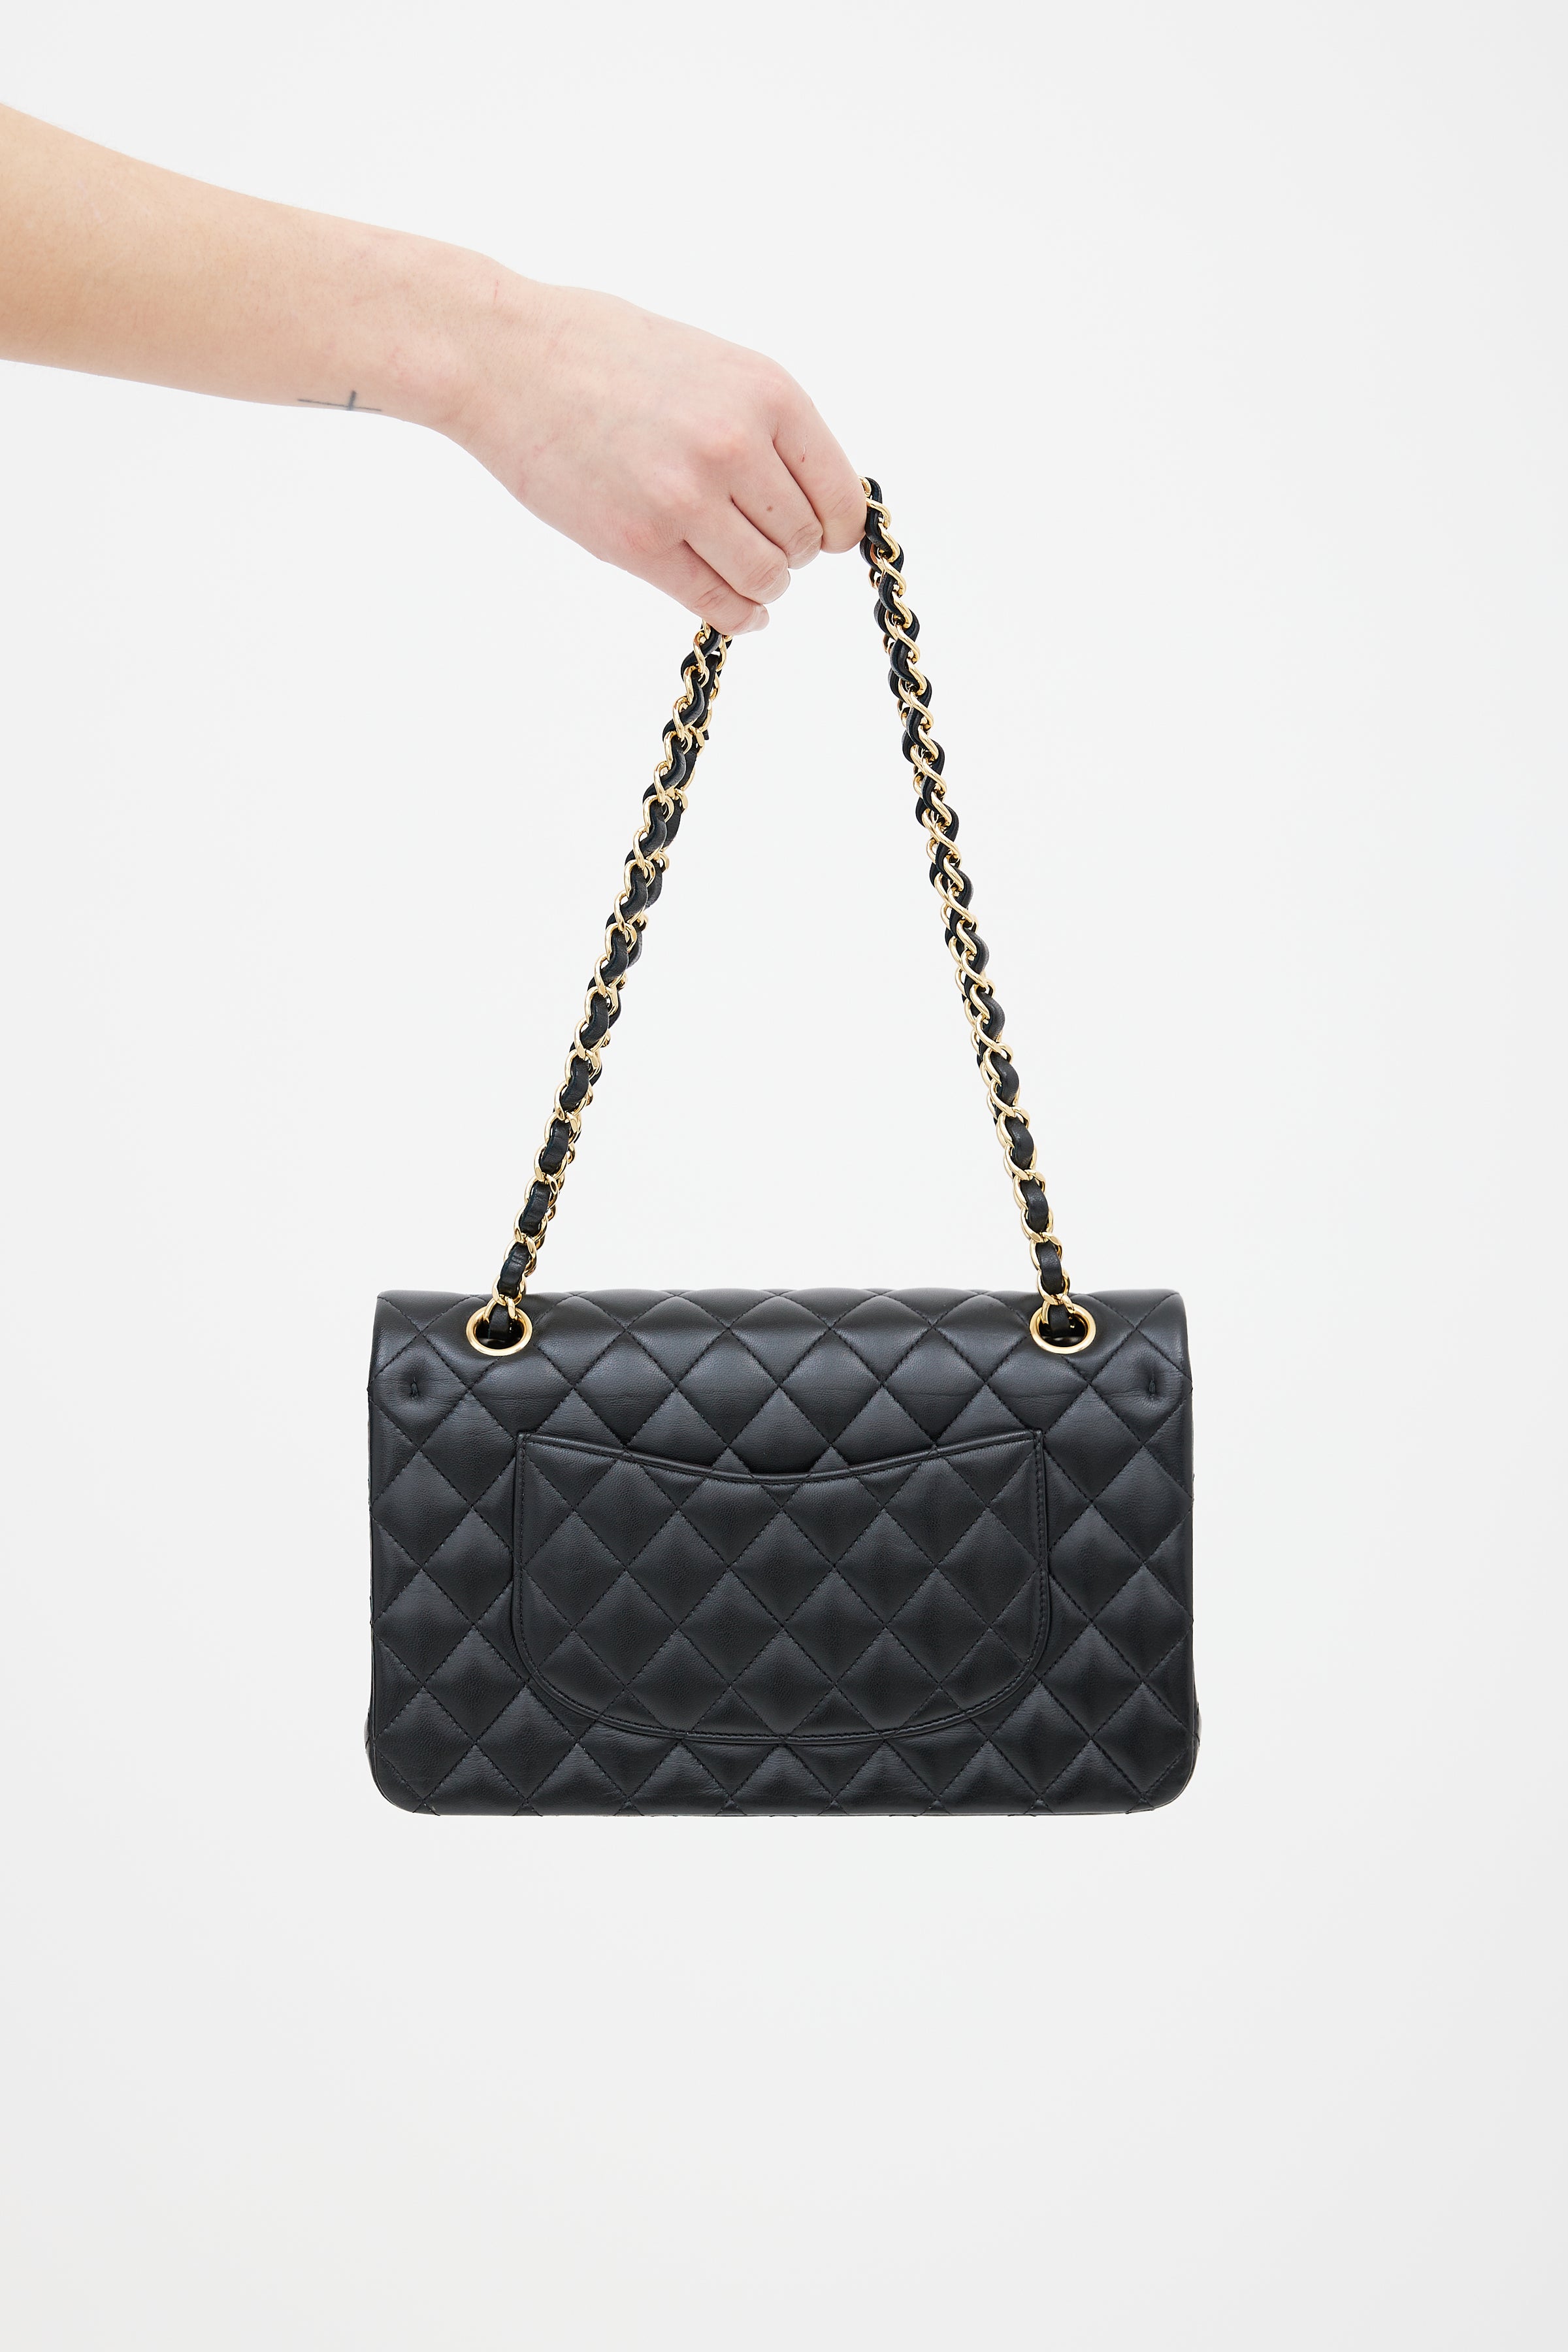 Pre Owned Chanel Classic Handbag - EDG London